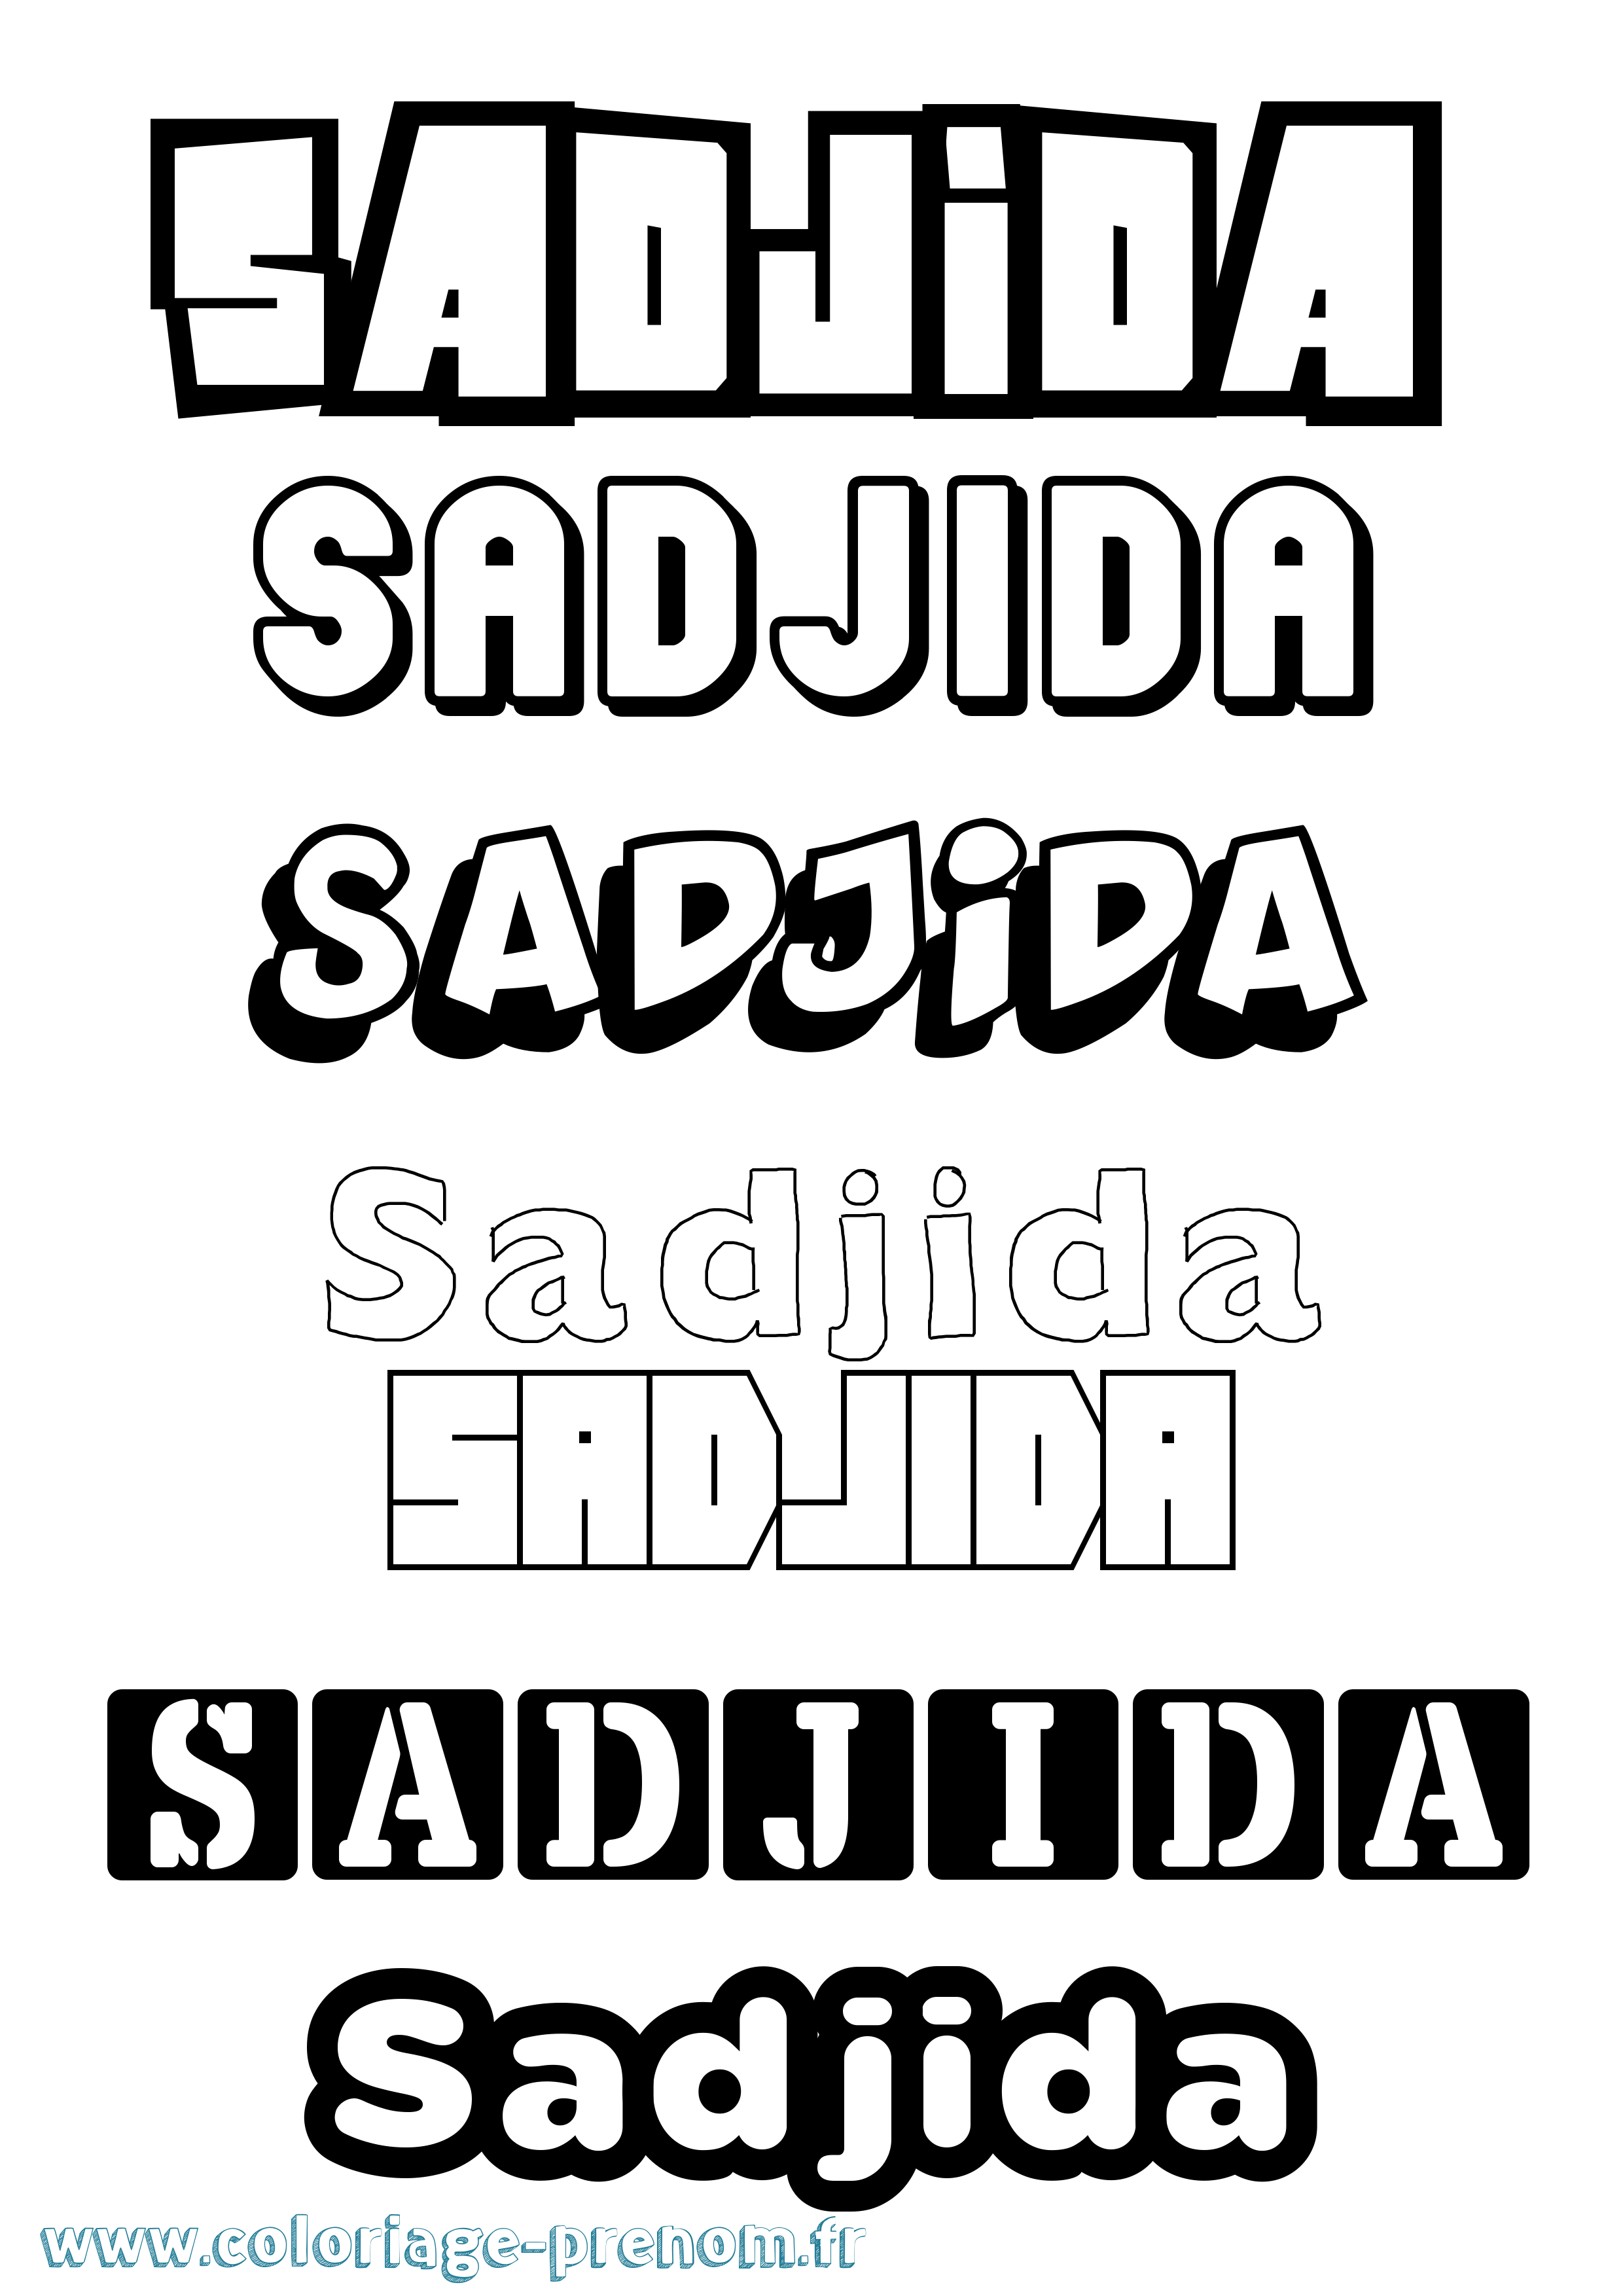 Coloriage prénom Sadjida Simple